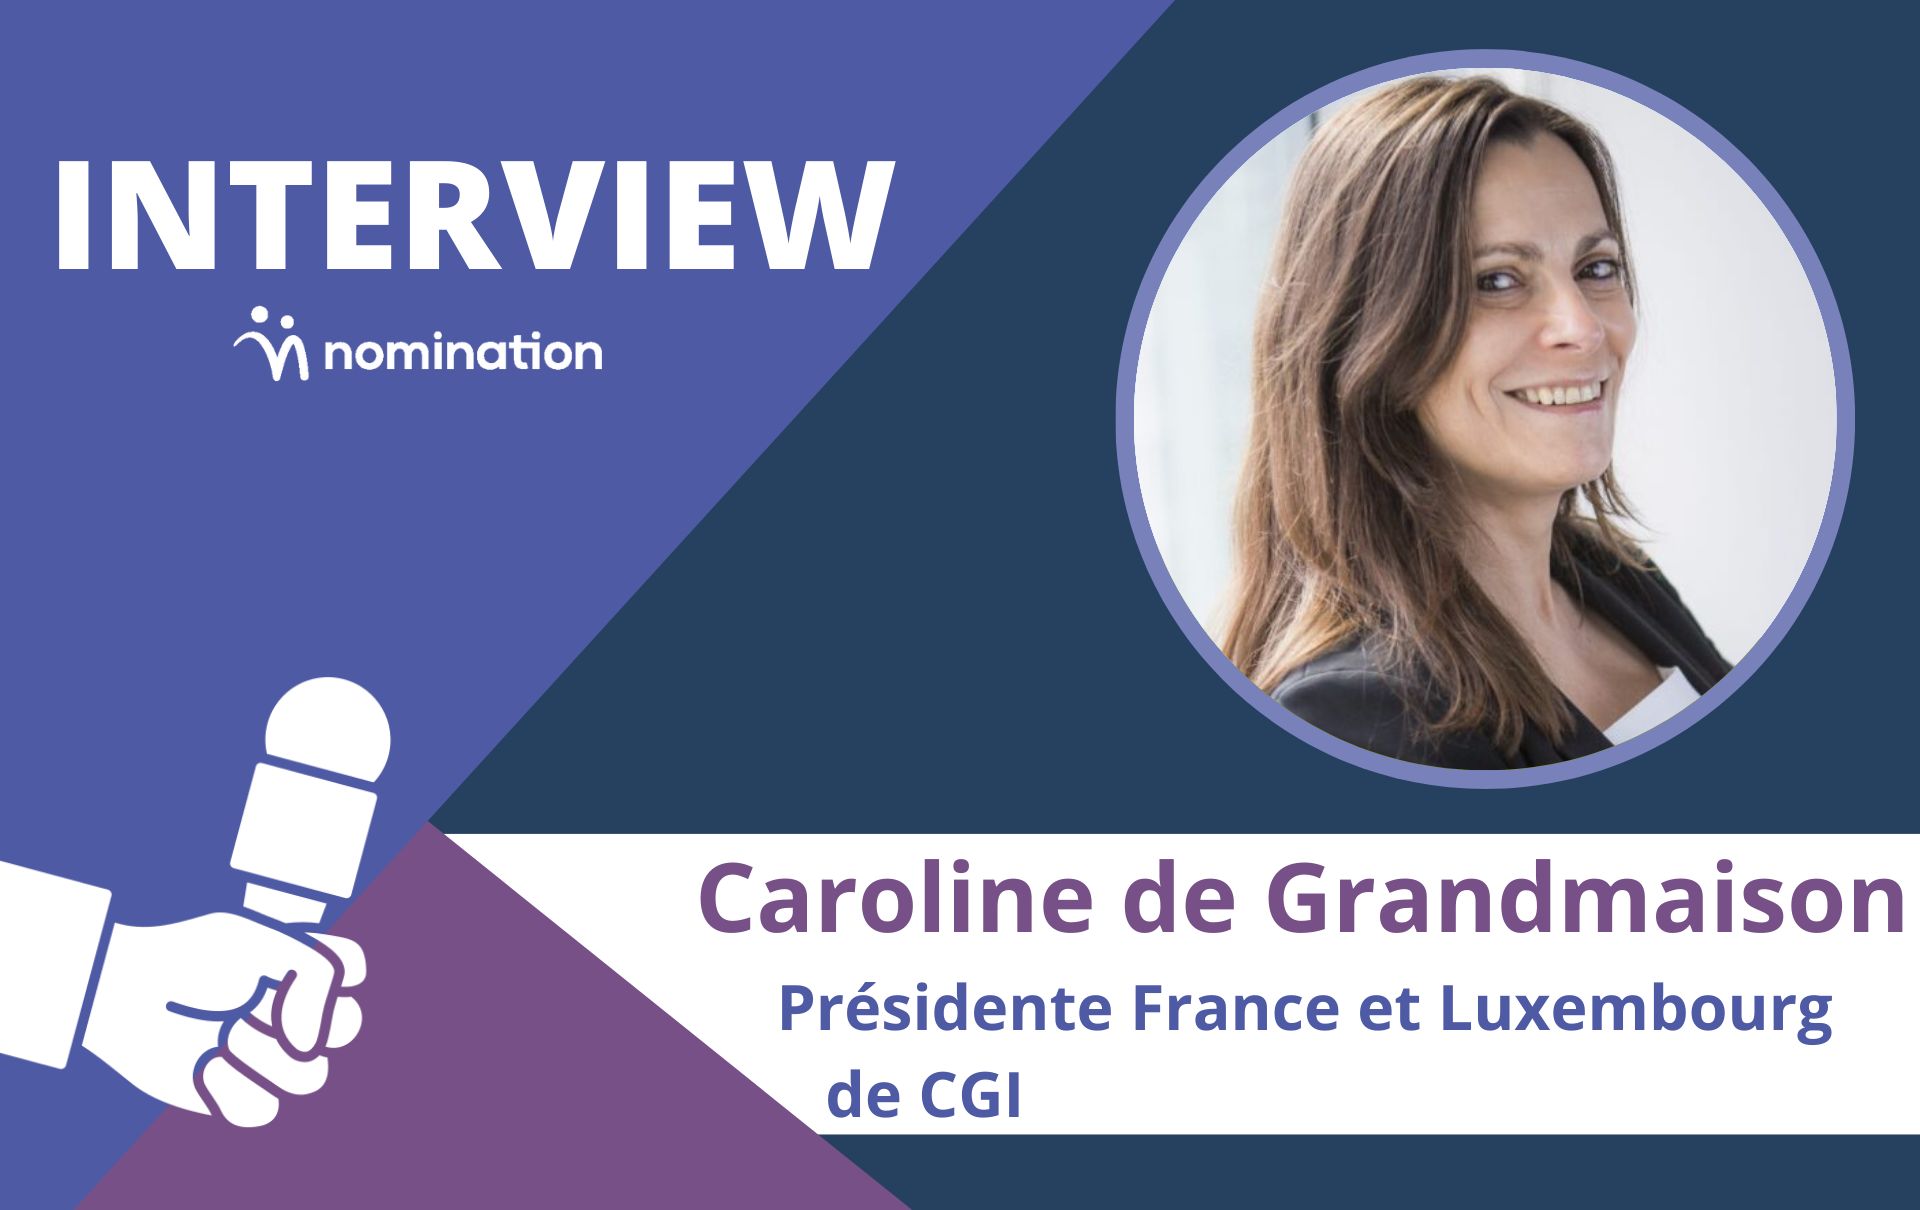 Caroline de Grandmaison, Présidente France et Luxembourg de CGI